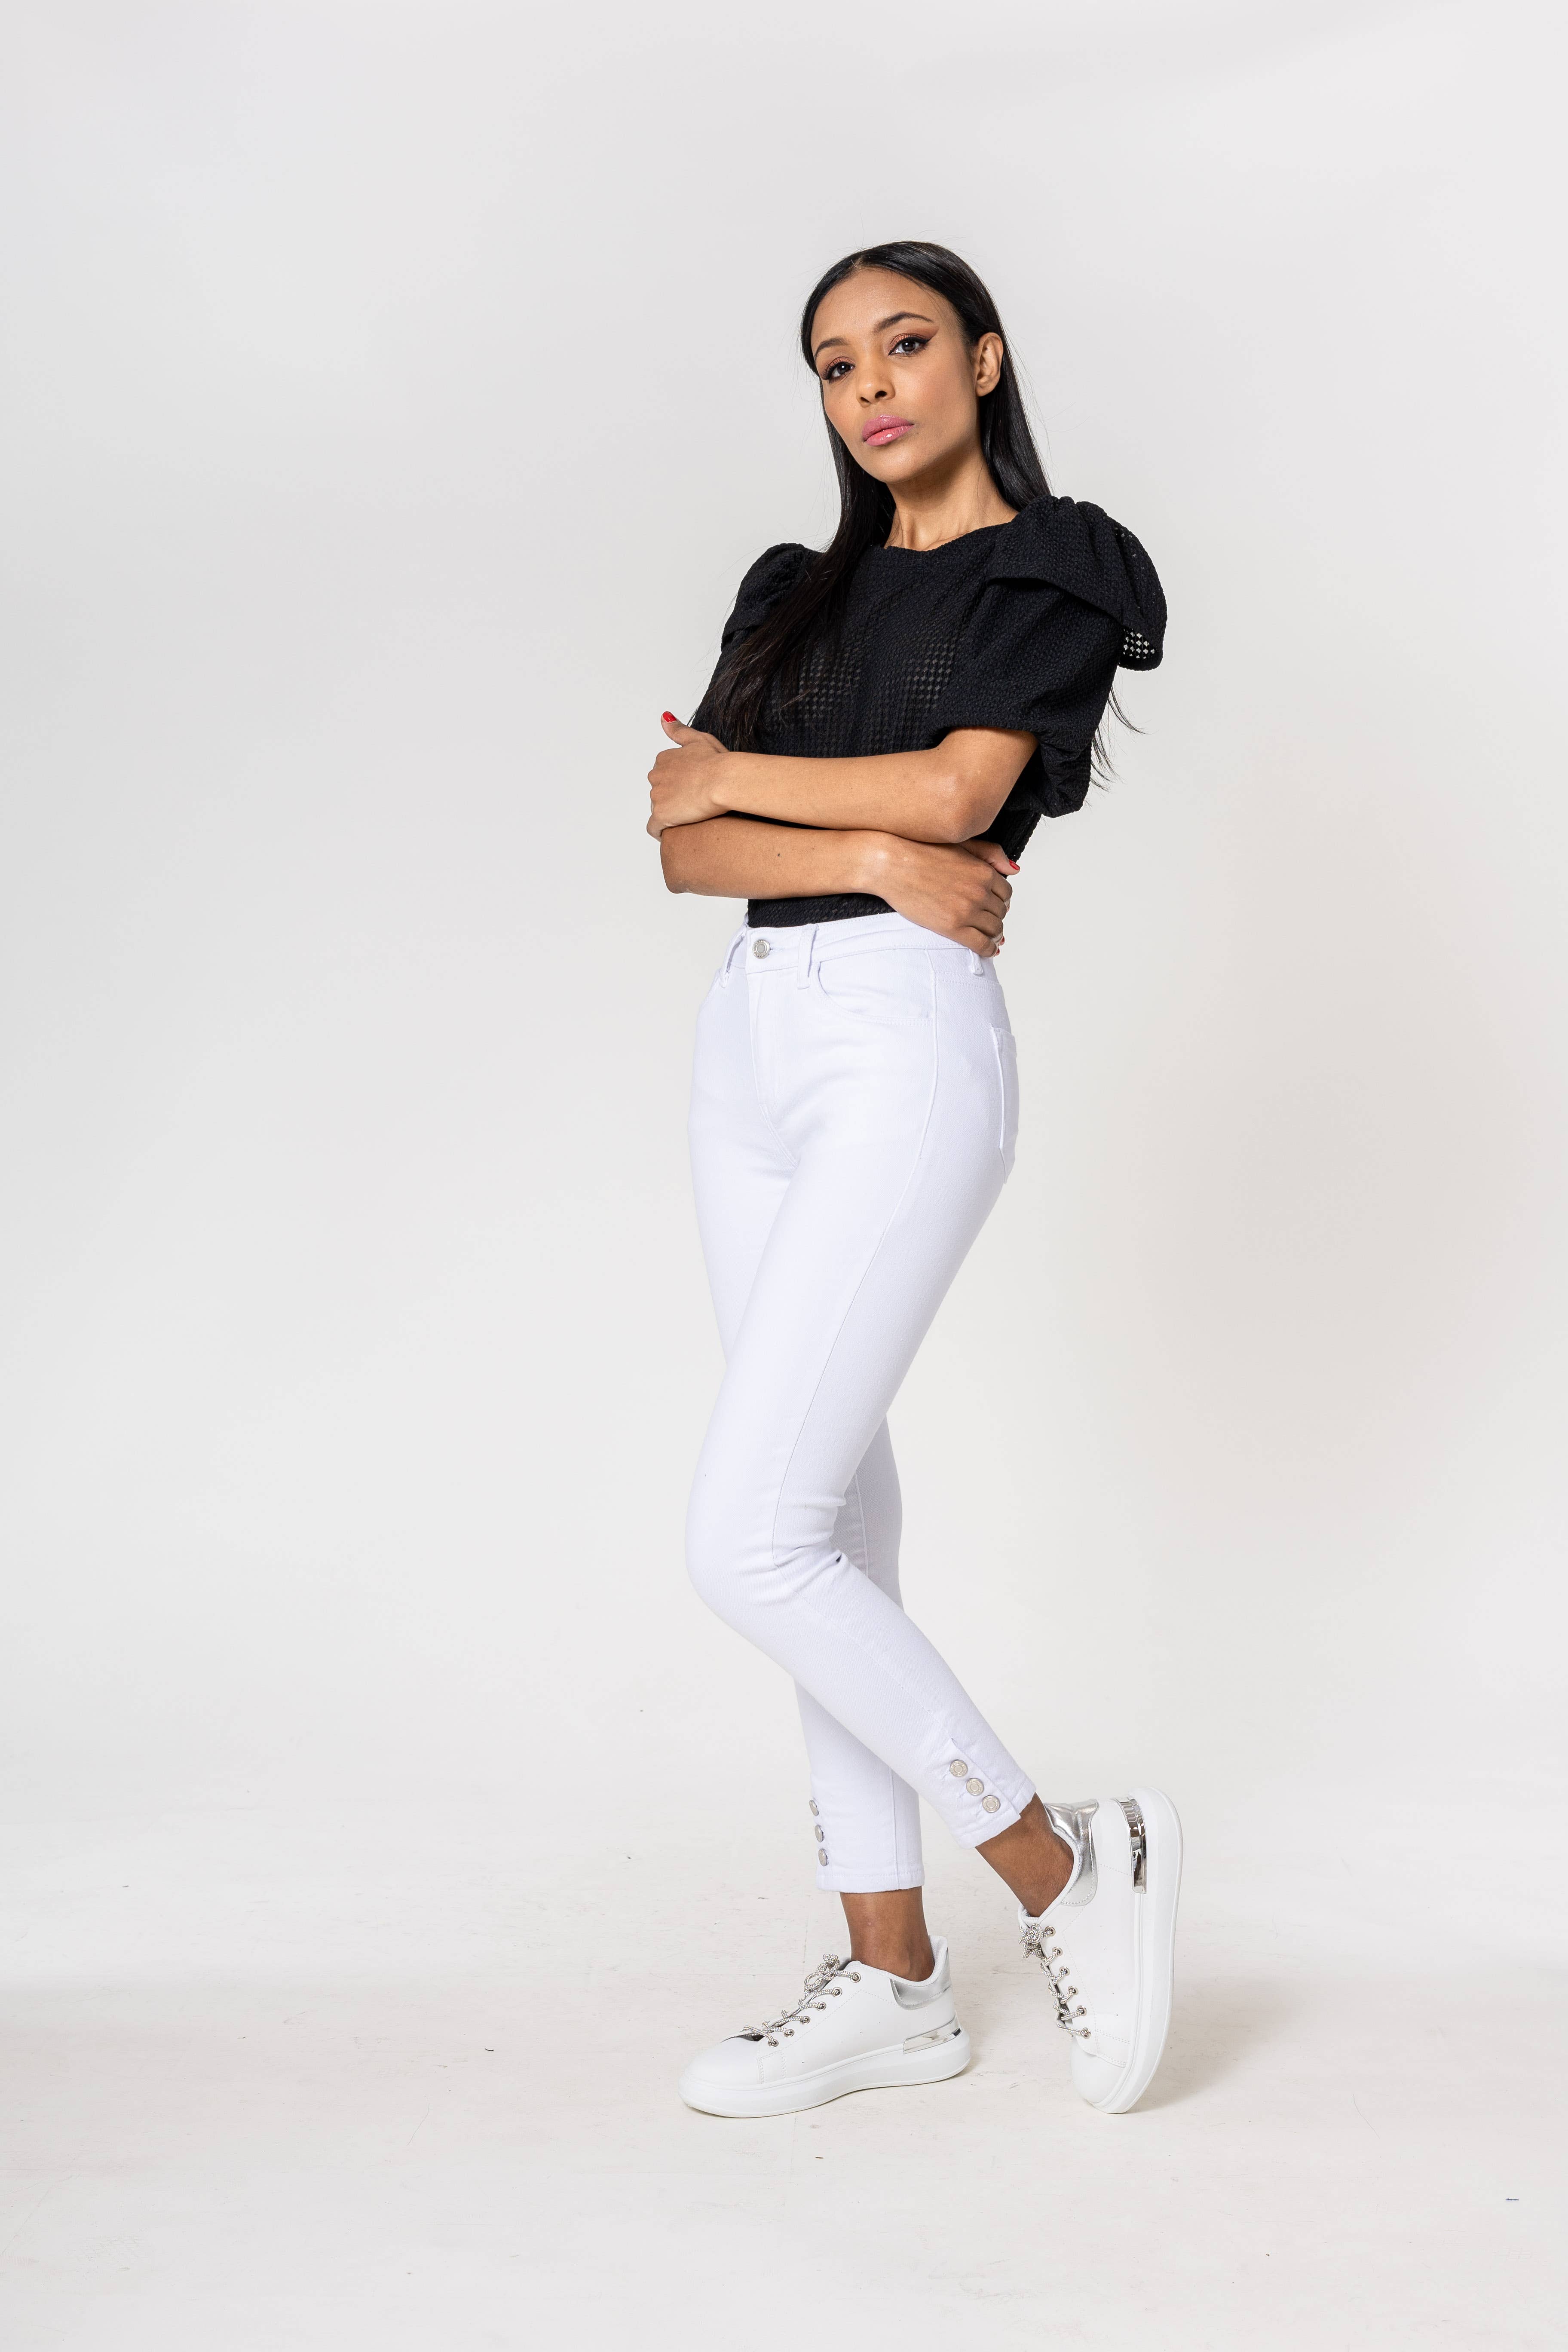 Nina Carter Women's Jeans Plus Size Stretch Jeans Plus Size Jeans